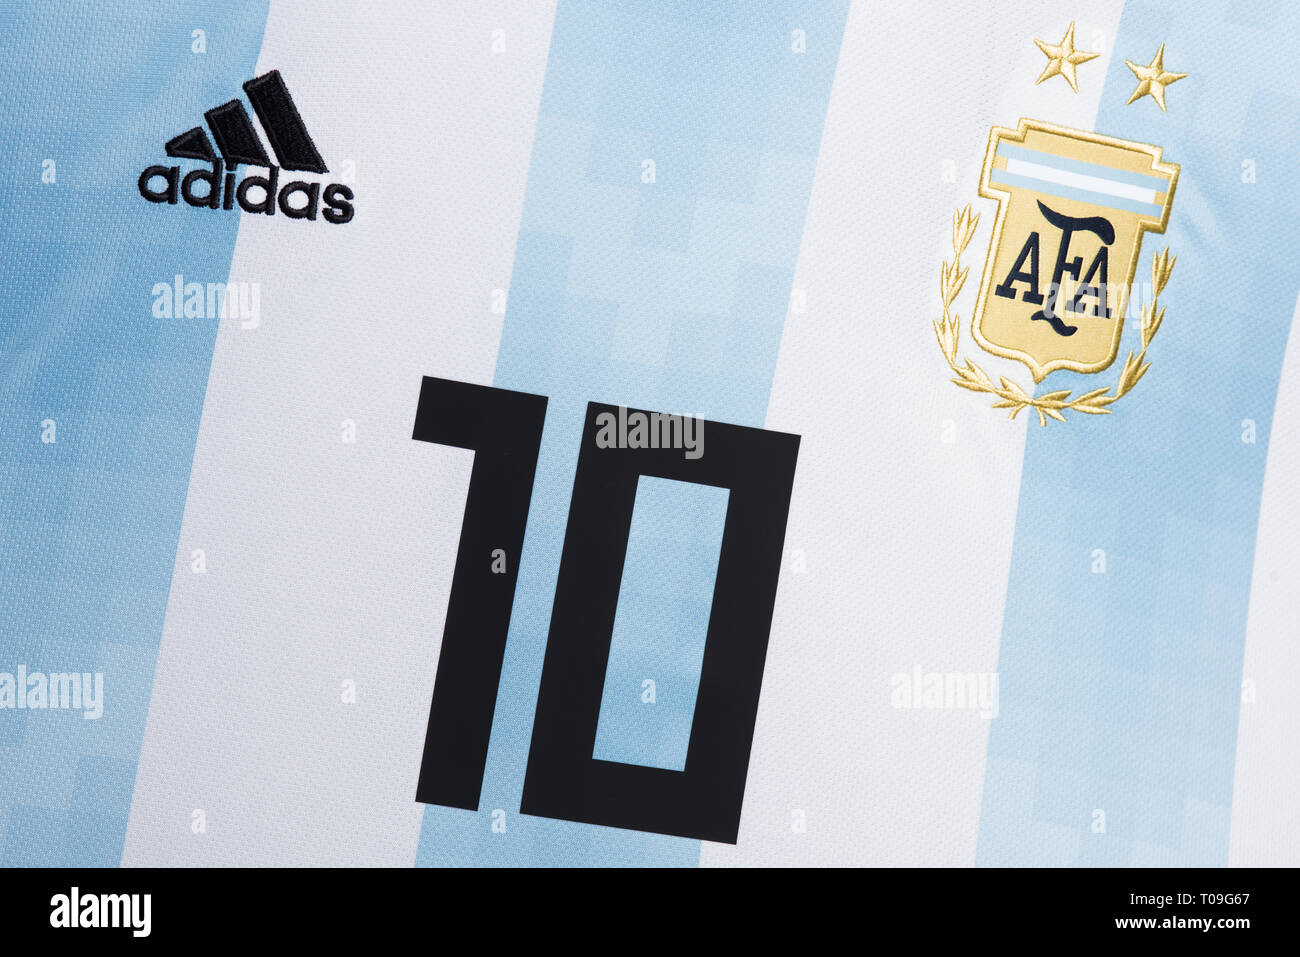 adidas messi argentina jersey